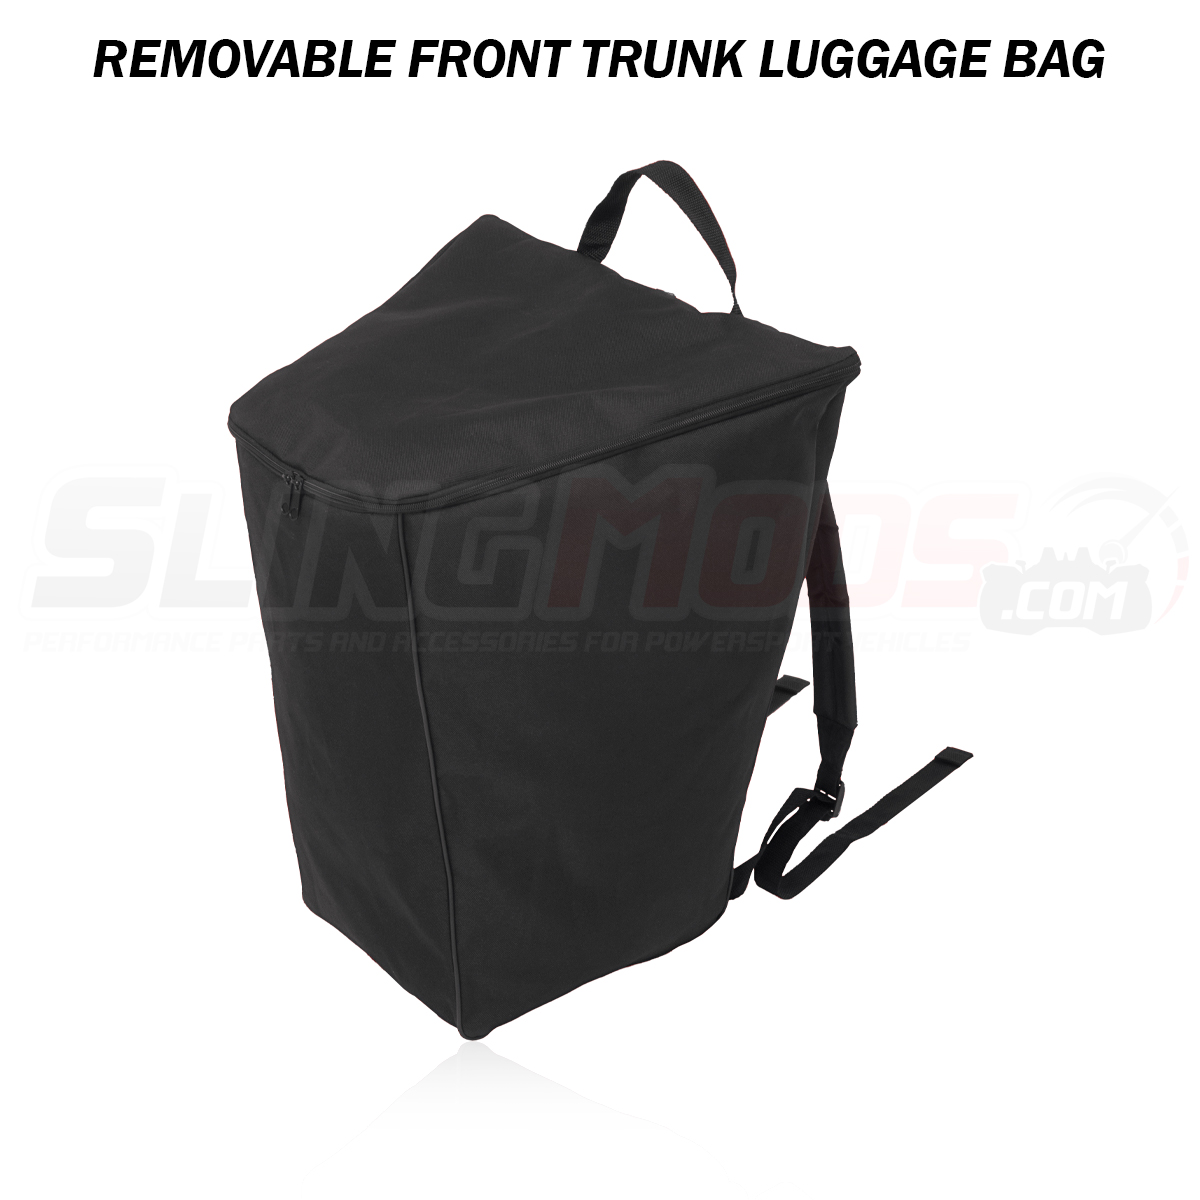 Can-Am Spyder RT Removable Luggage Bag Bundle (2010-19)